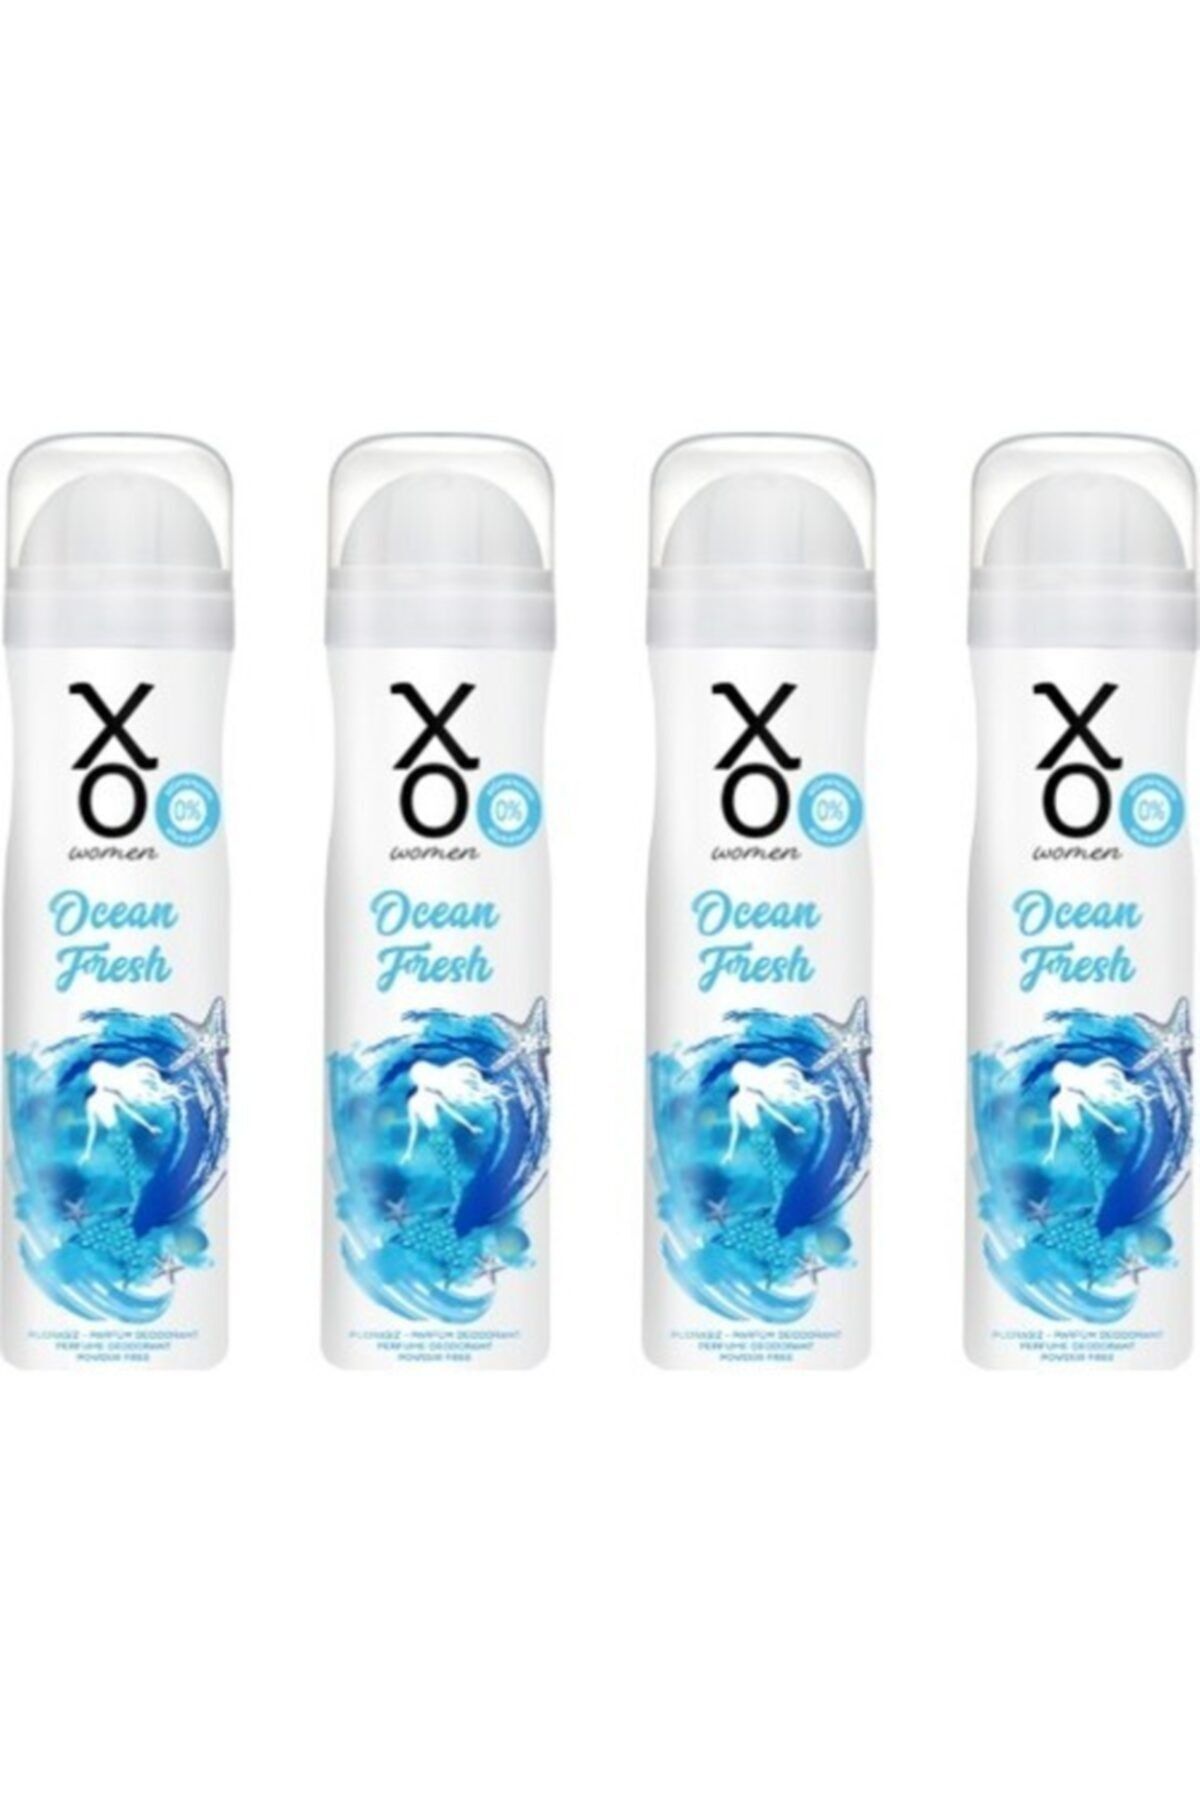 Xo X O Doedorant Kadin Ocean Fresh Joy 150 ml X 4 Adet